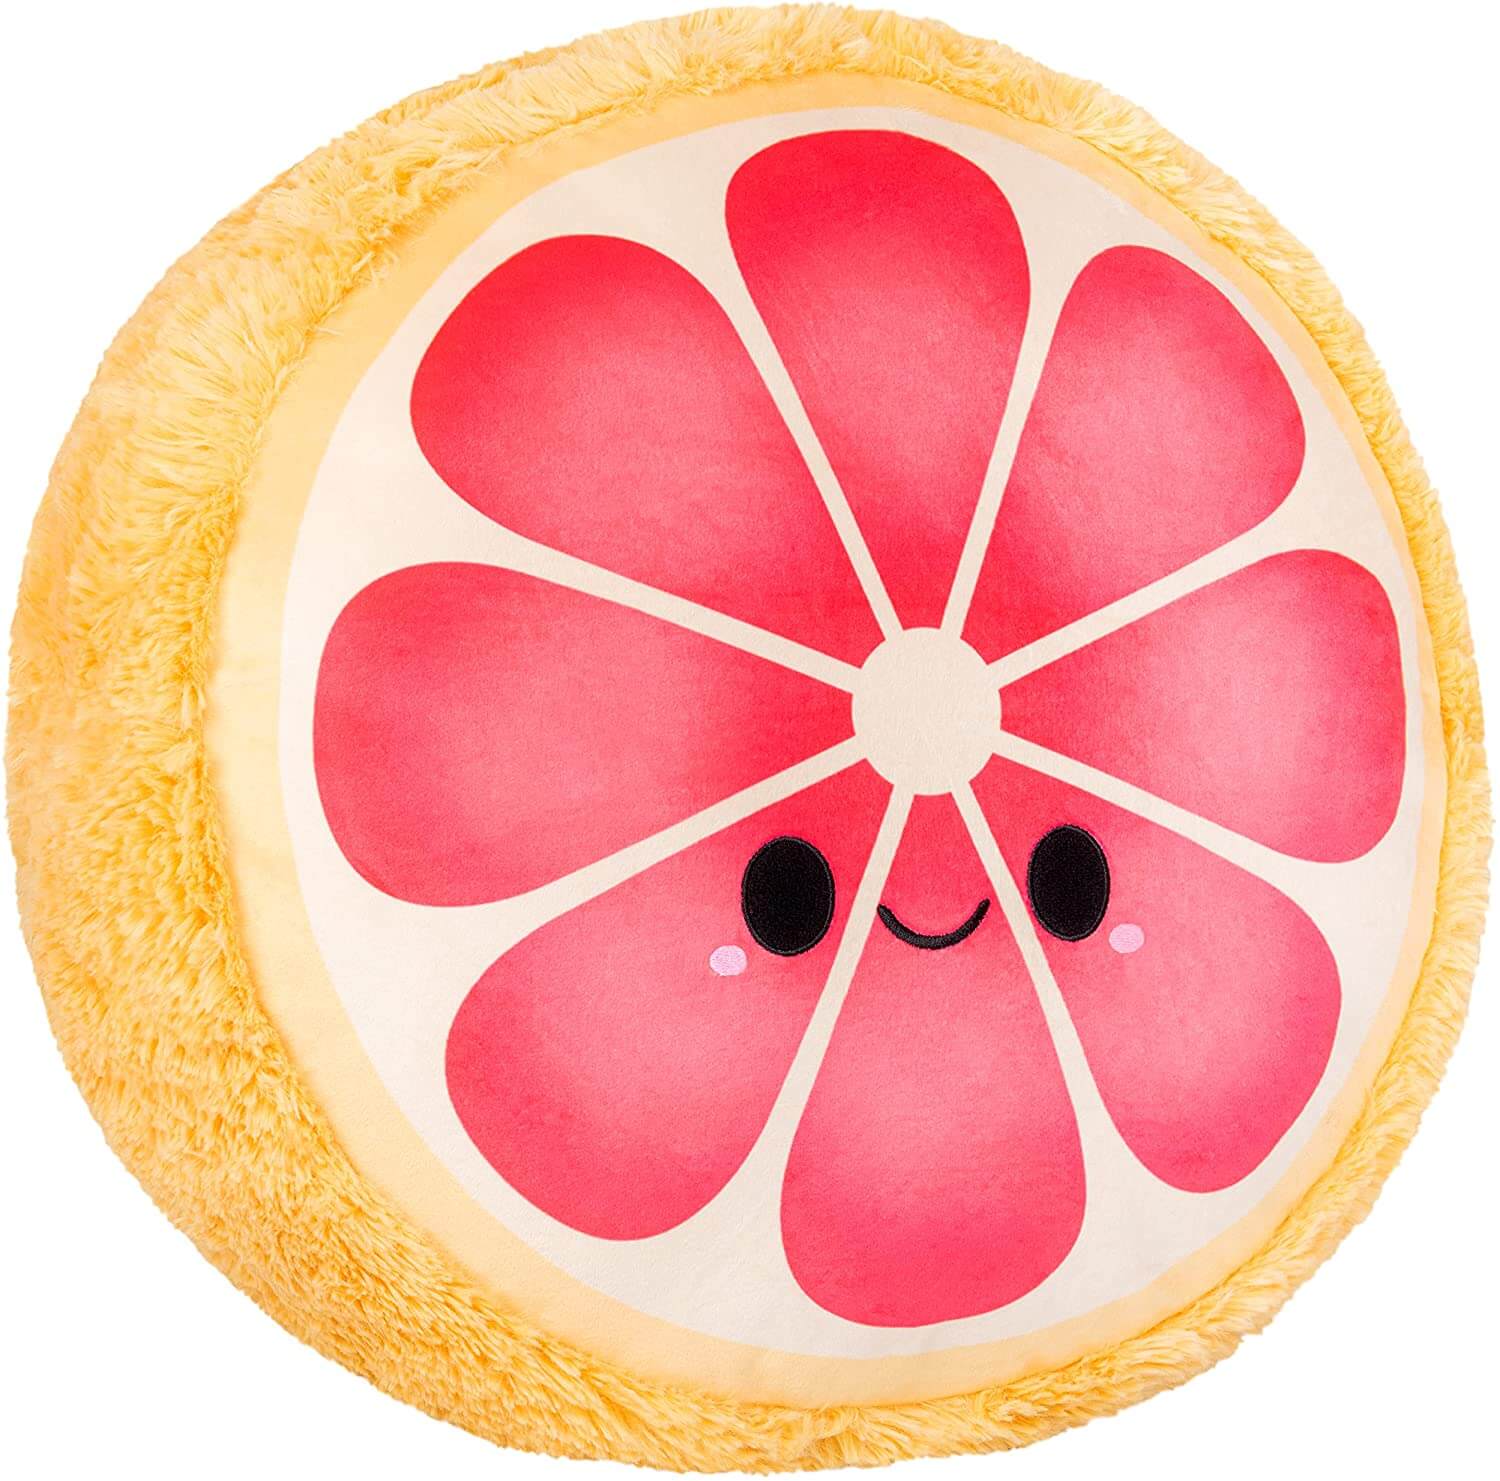 Squishable Comfort Food Grapefruit Plush